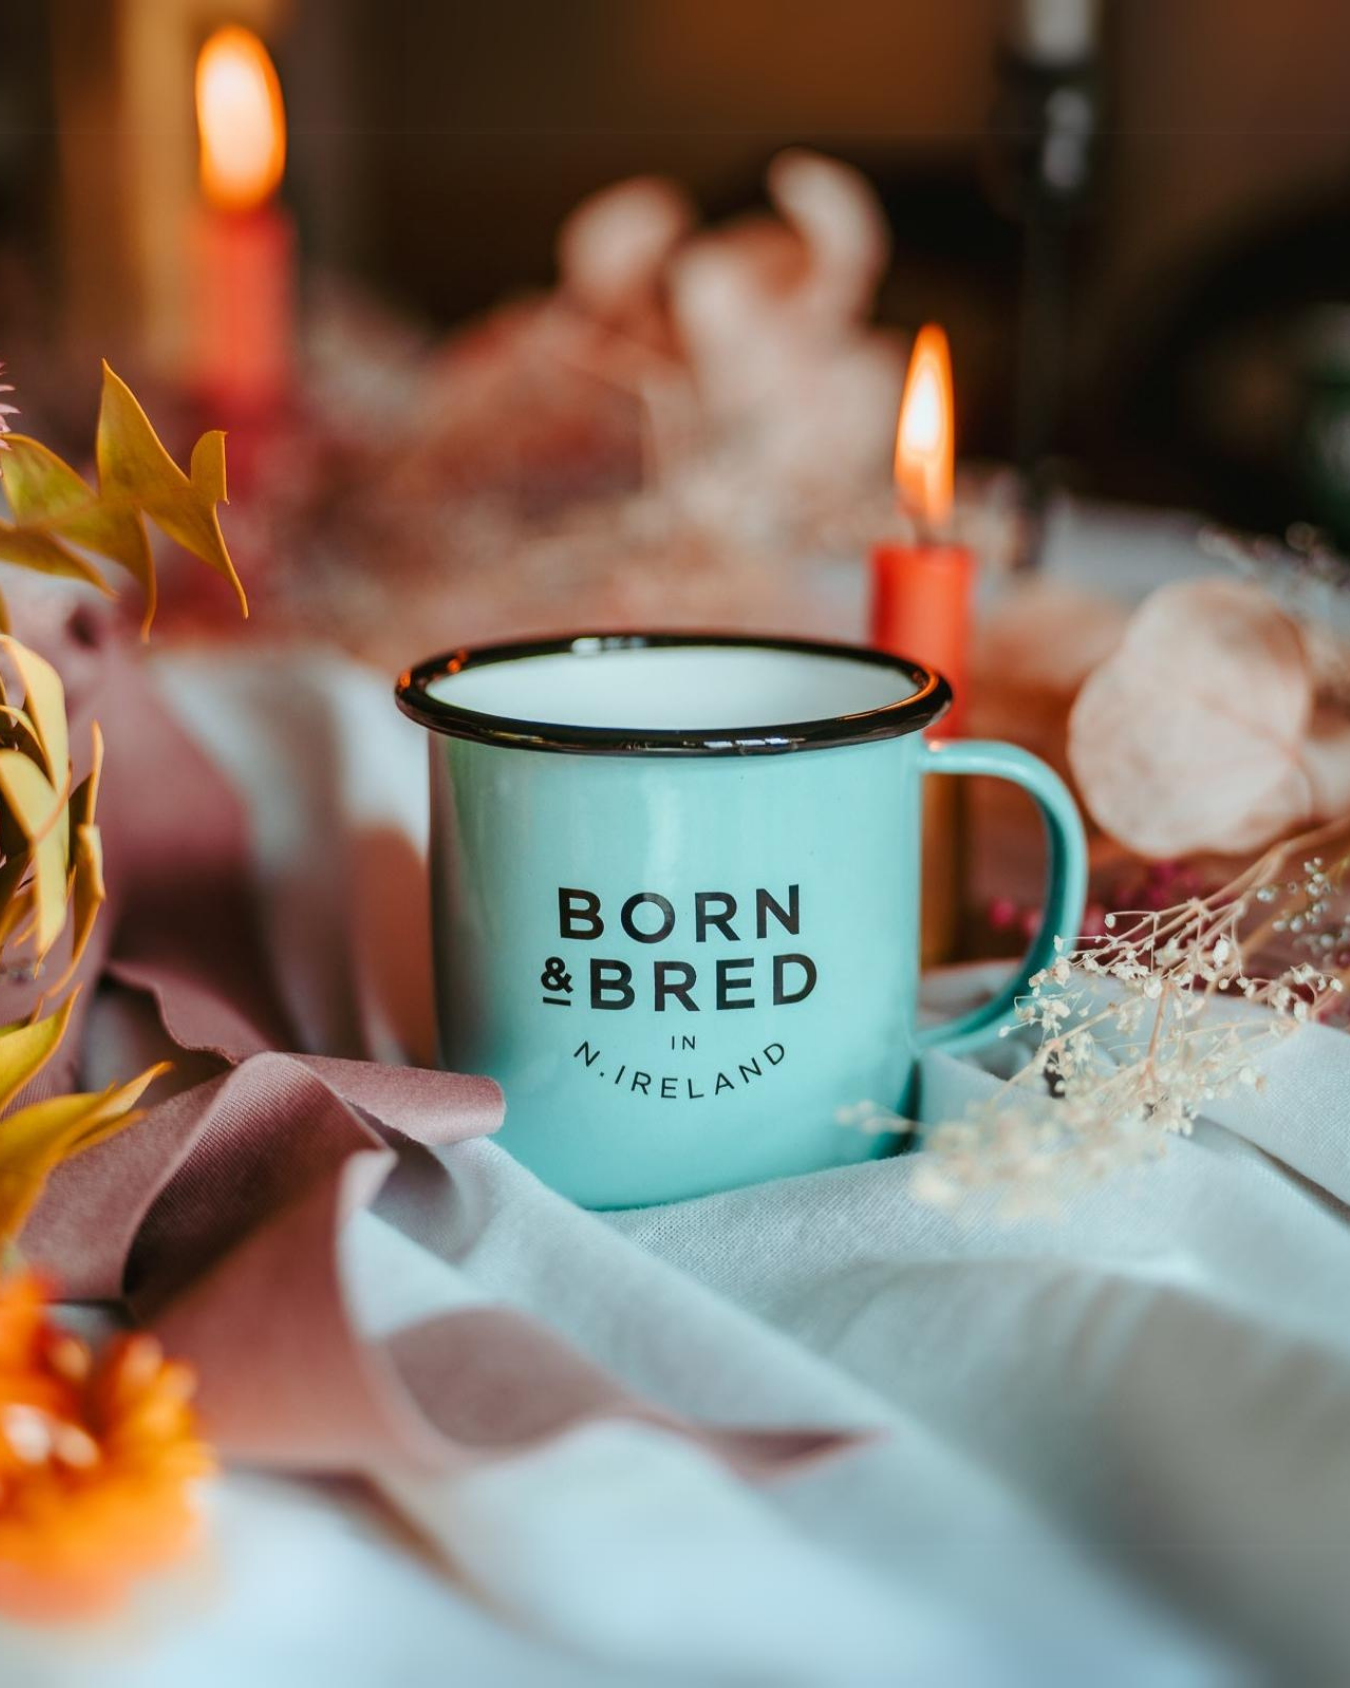 Born & Bred in Northern Ireland Enamel Mug